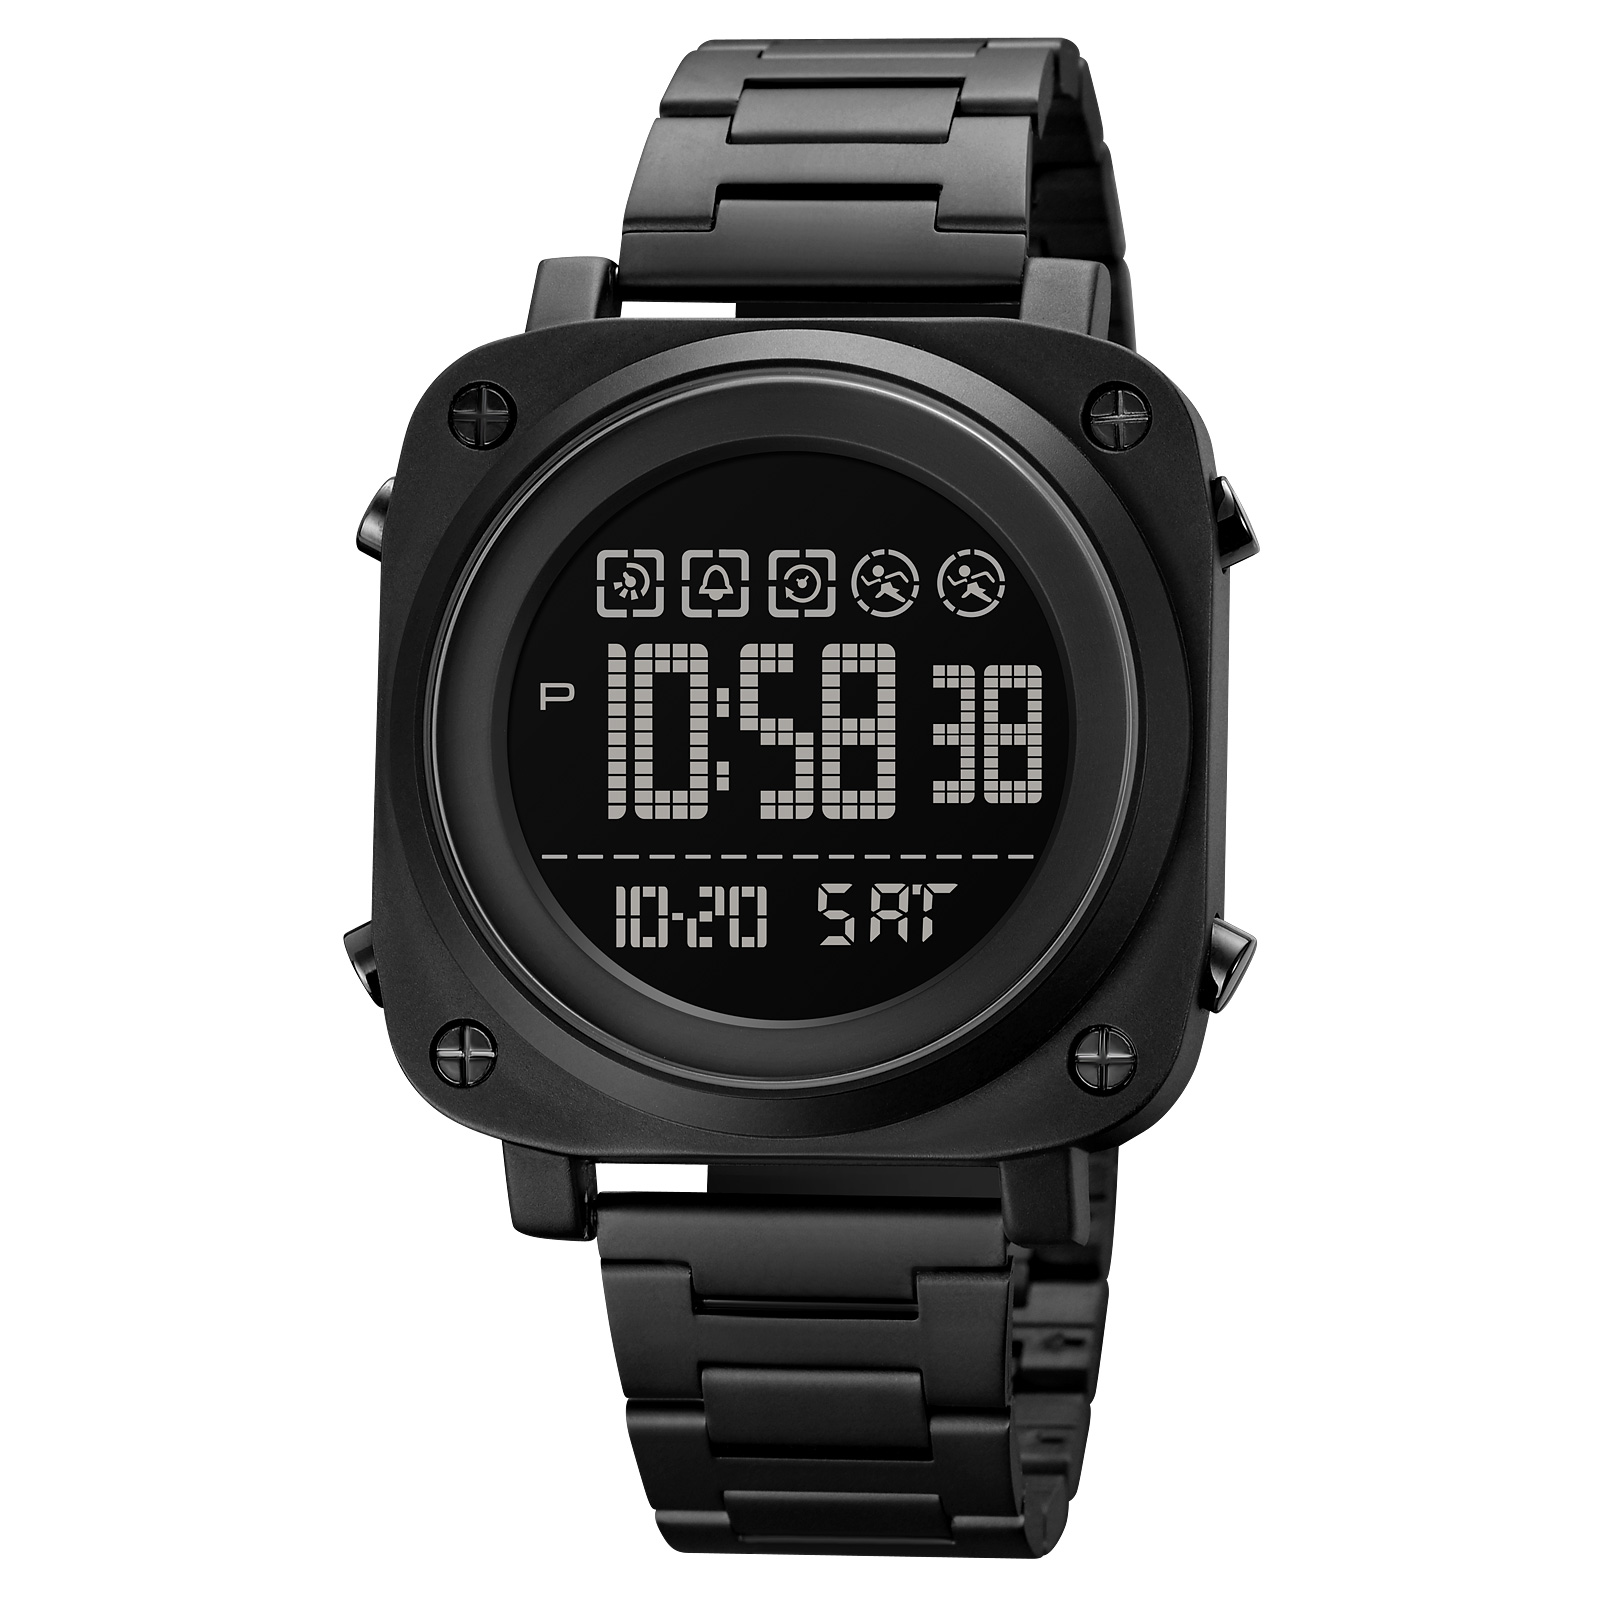  OEM digital watch manufacturer-Skmei Watch Manufacture Co.,Ltd